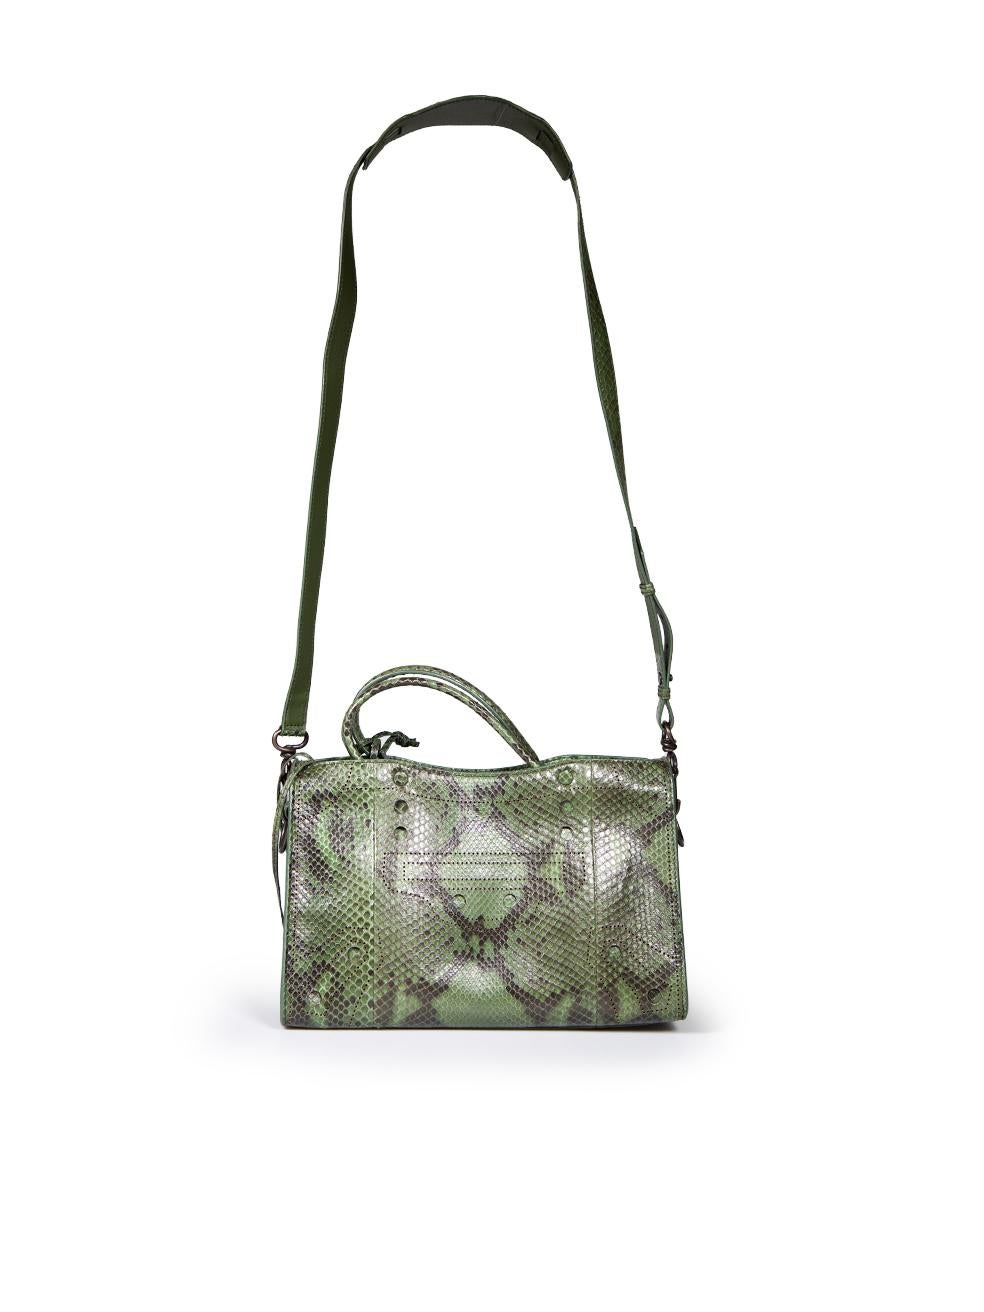 Balenciaga Green Snakeskin Mini Blackout City Handbag In Good Condition For Sale In London, GB